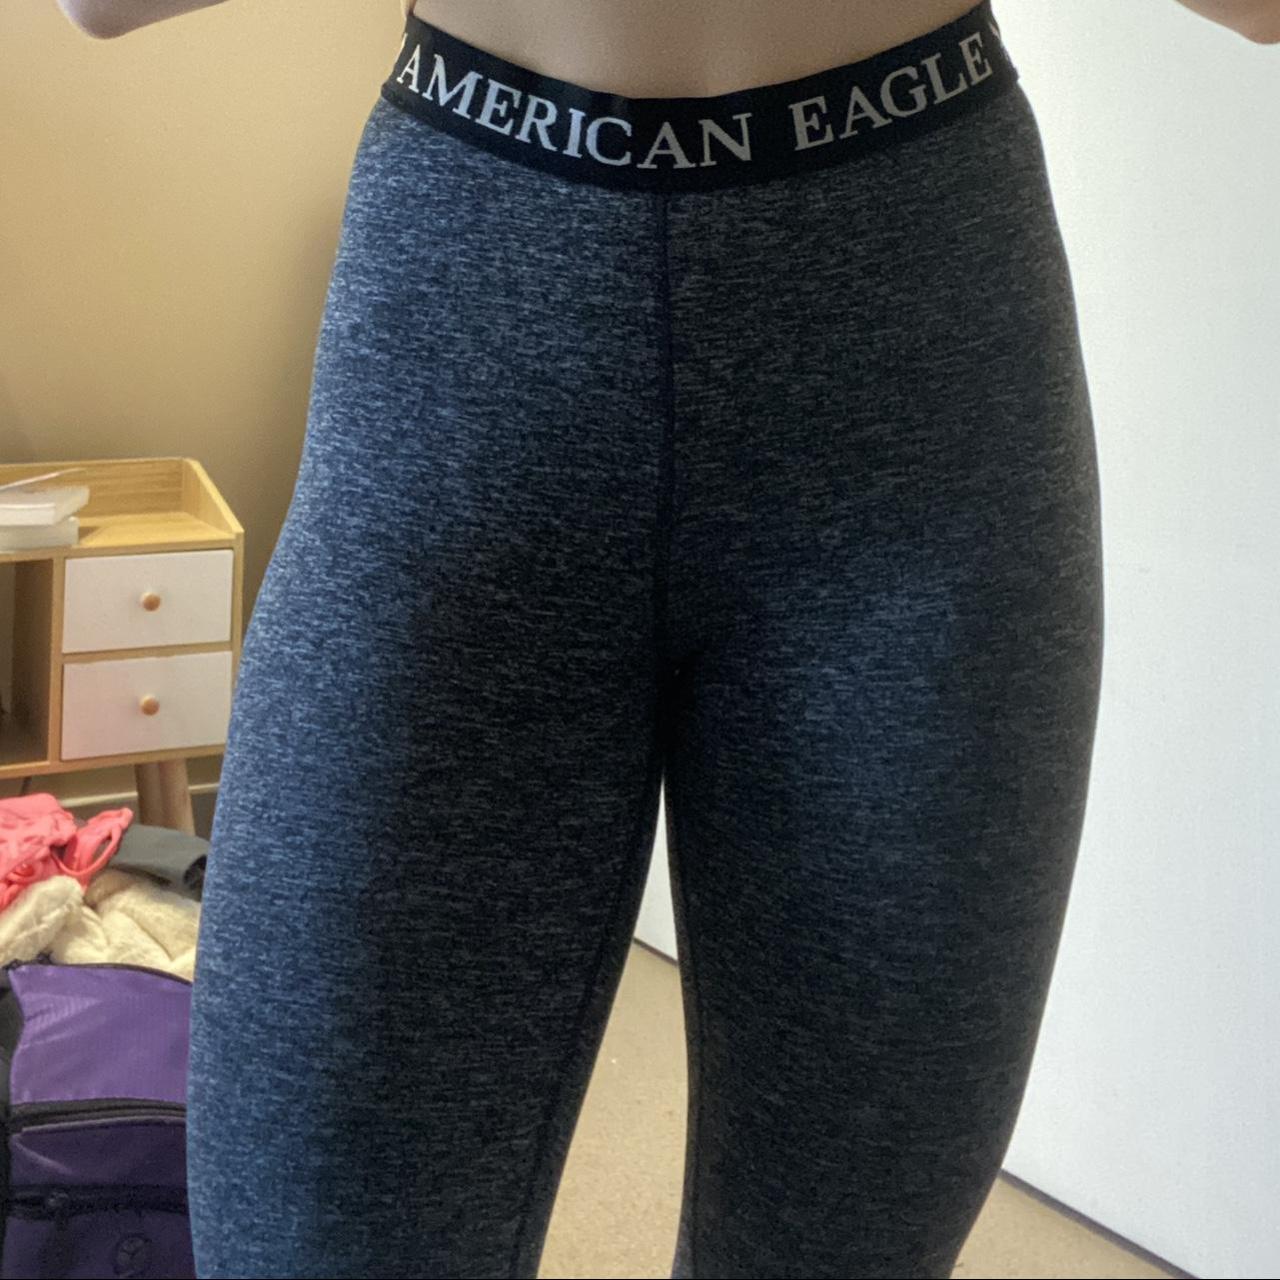 Grey American eagle leggings size small - Depop